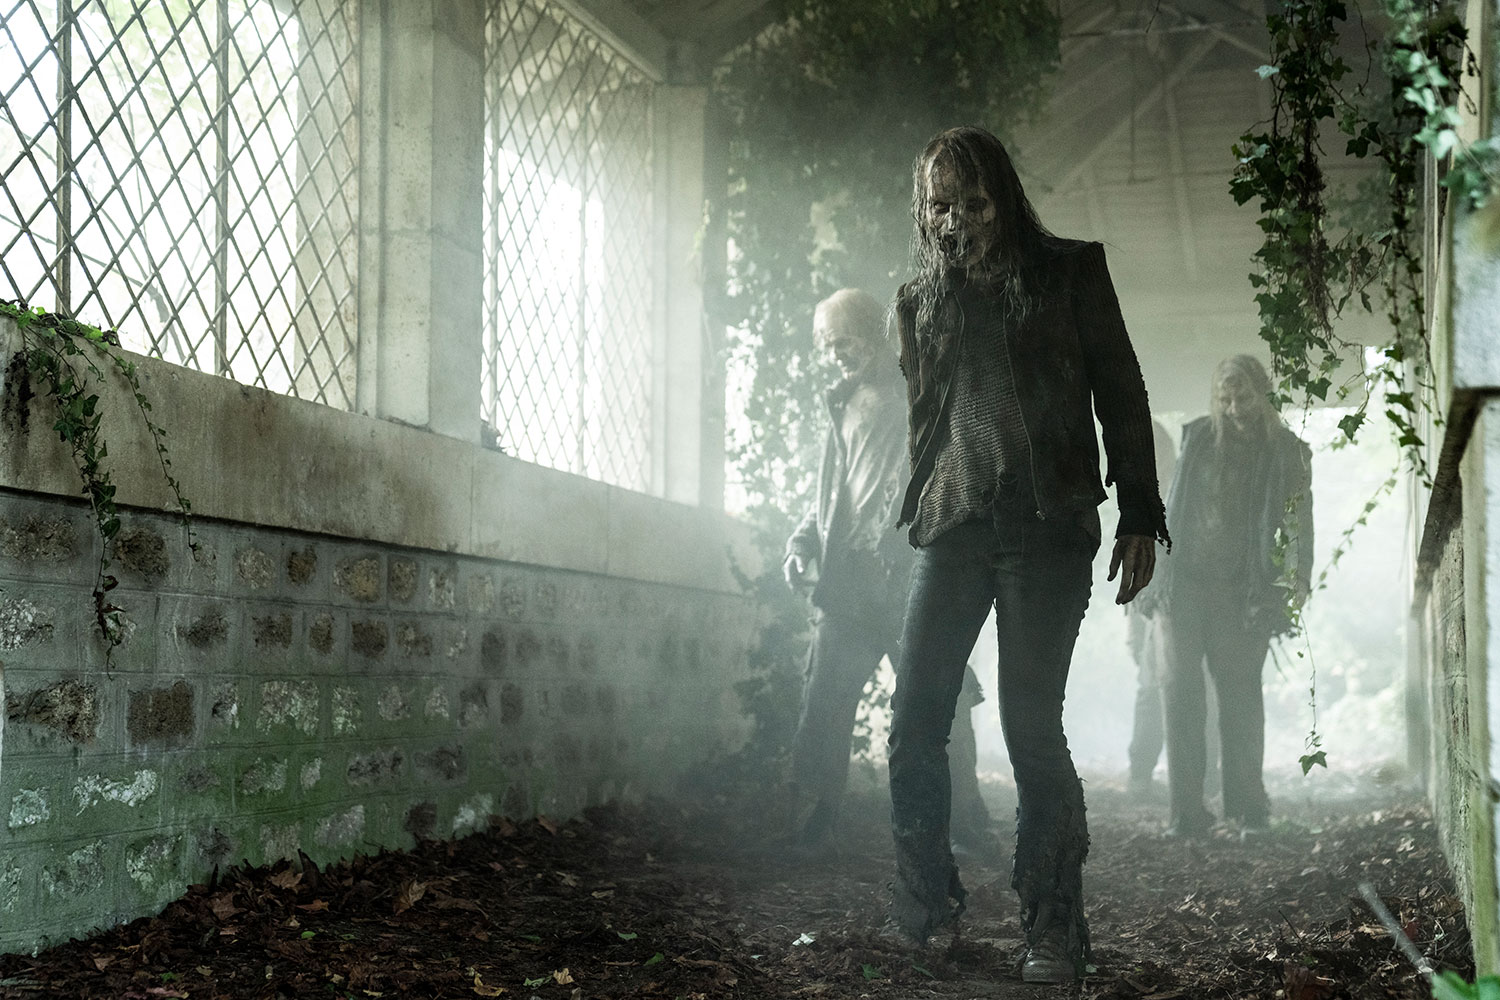 The Walking Dead: Daryl Dixon still showing smart zombies